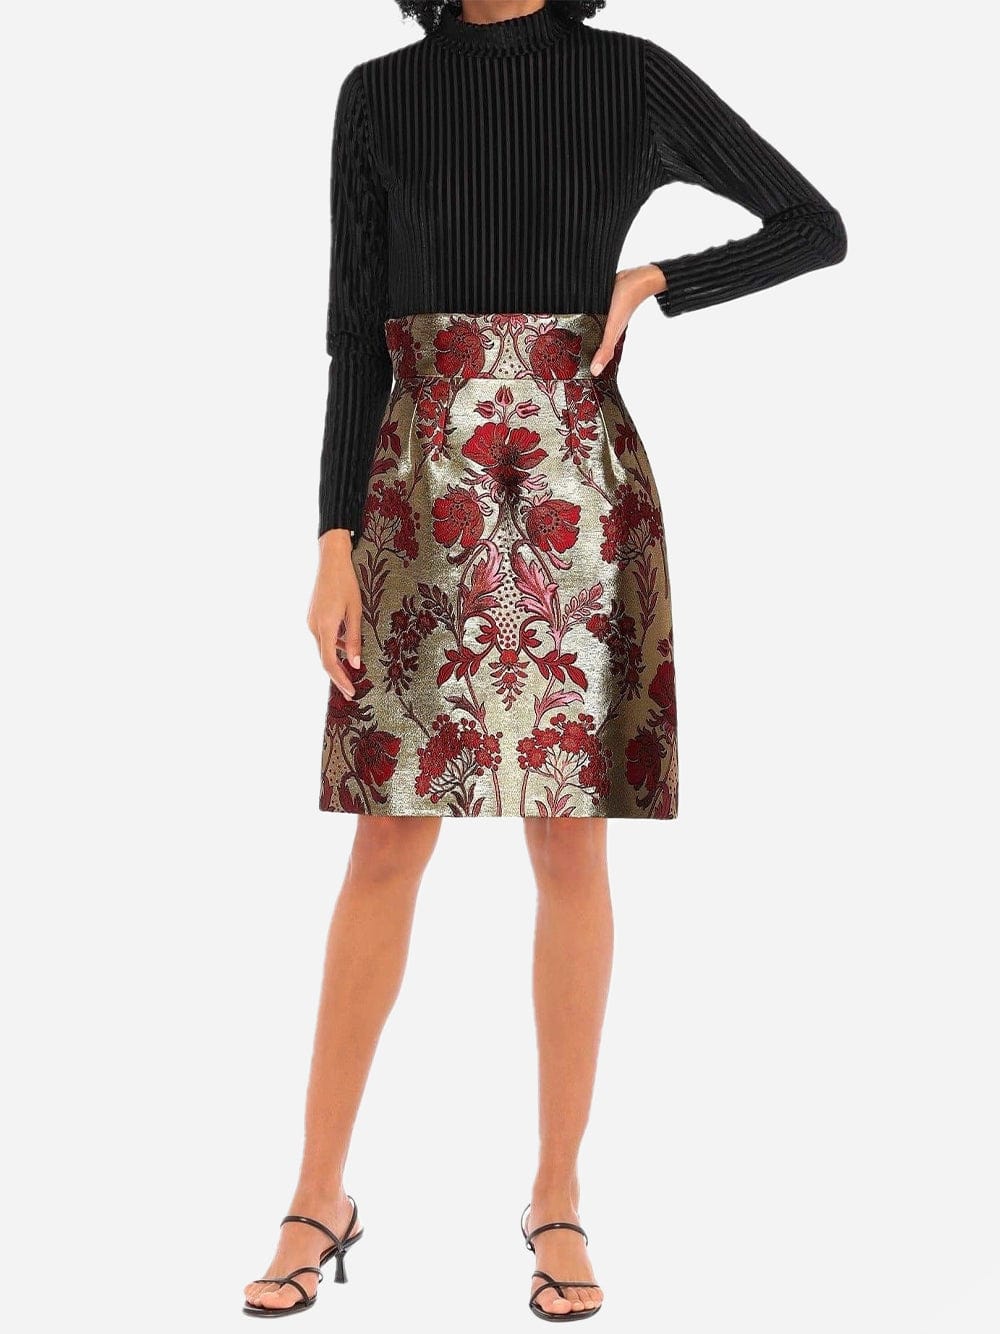 Dolce & Gabbana Jacquard Floral Skirt